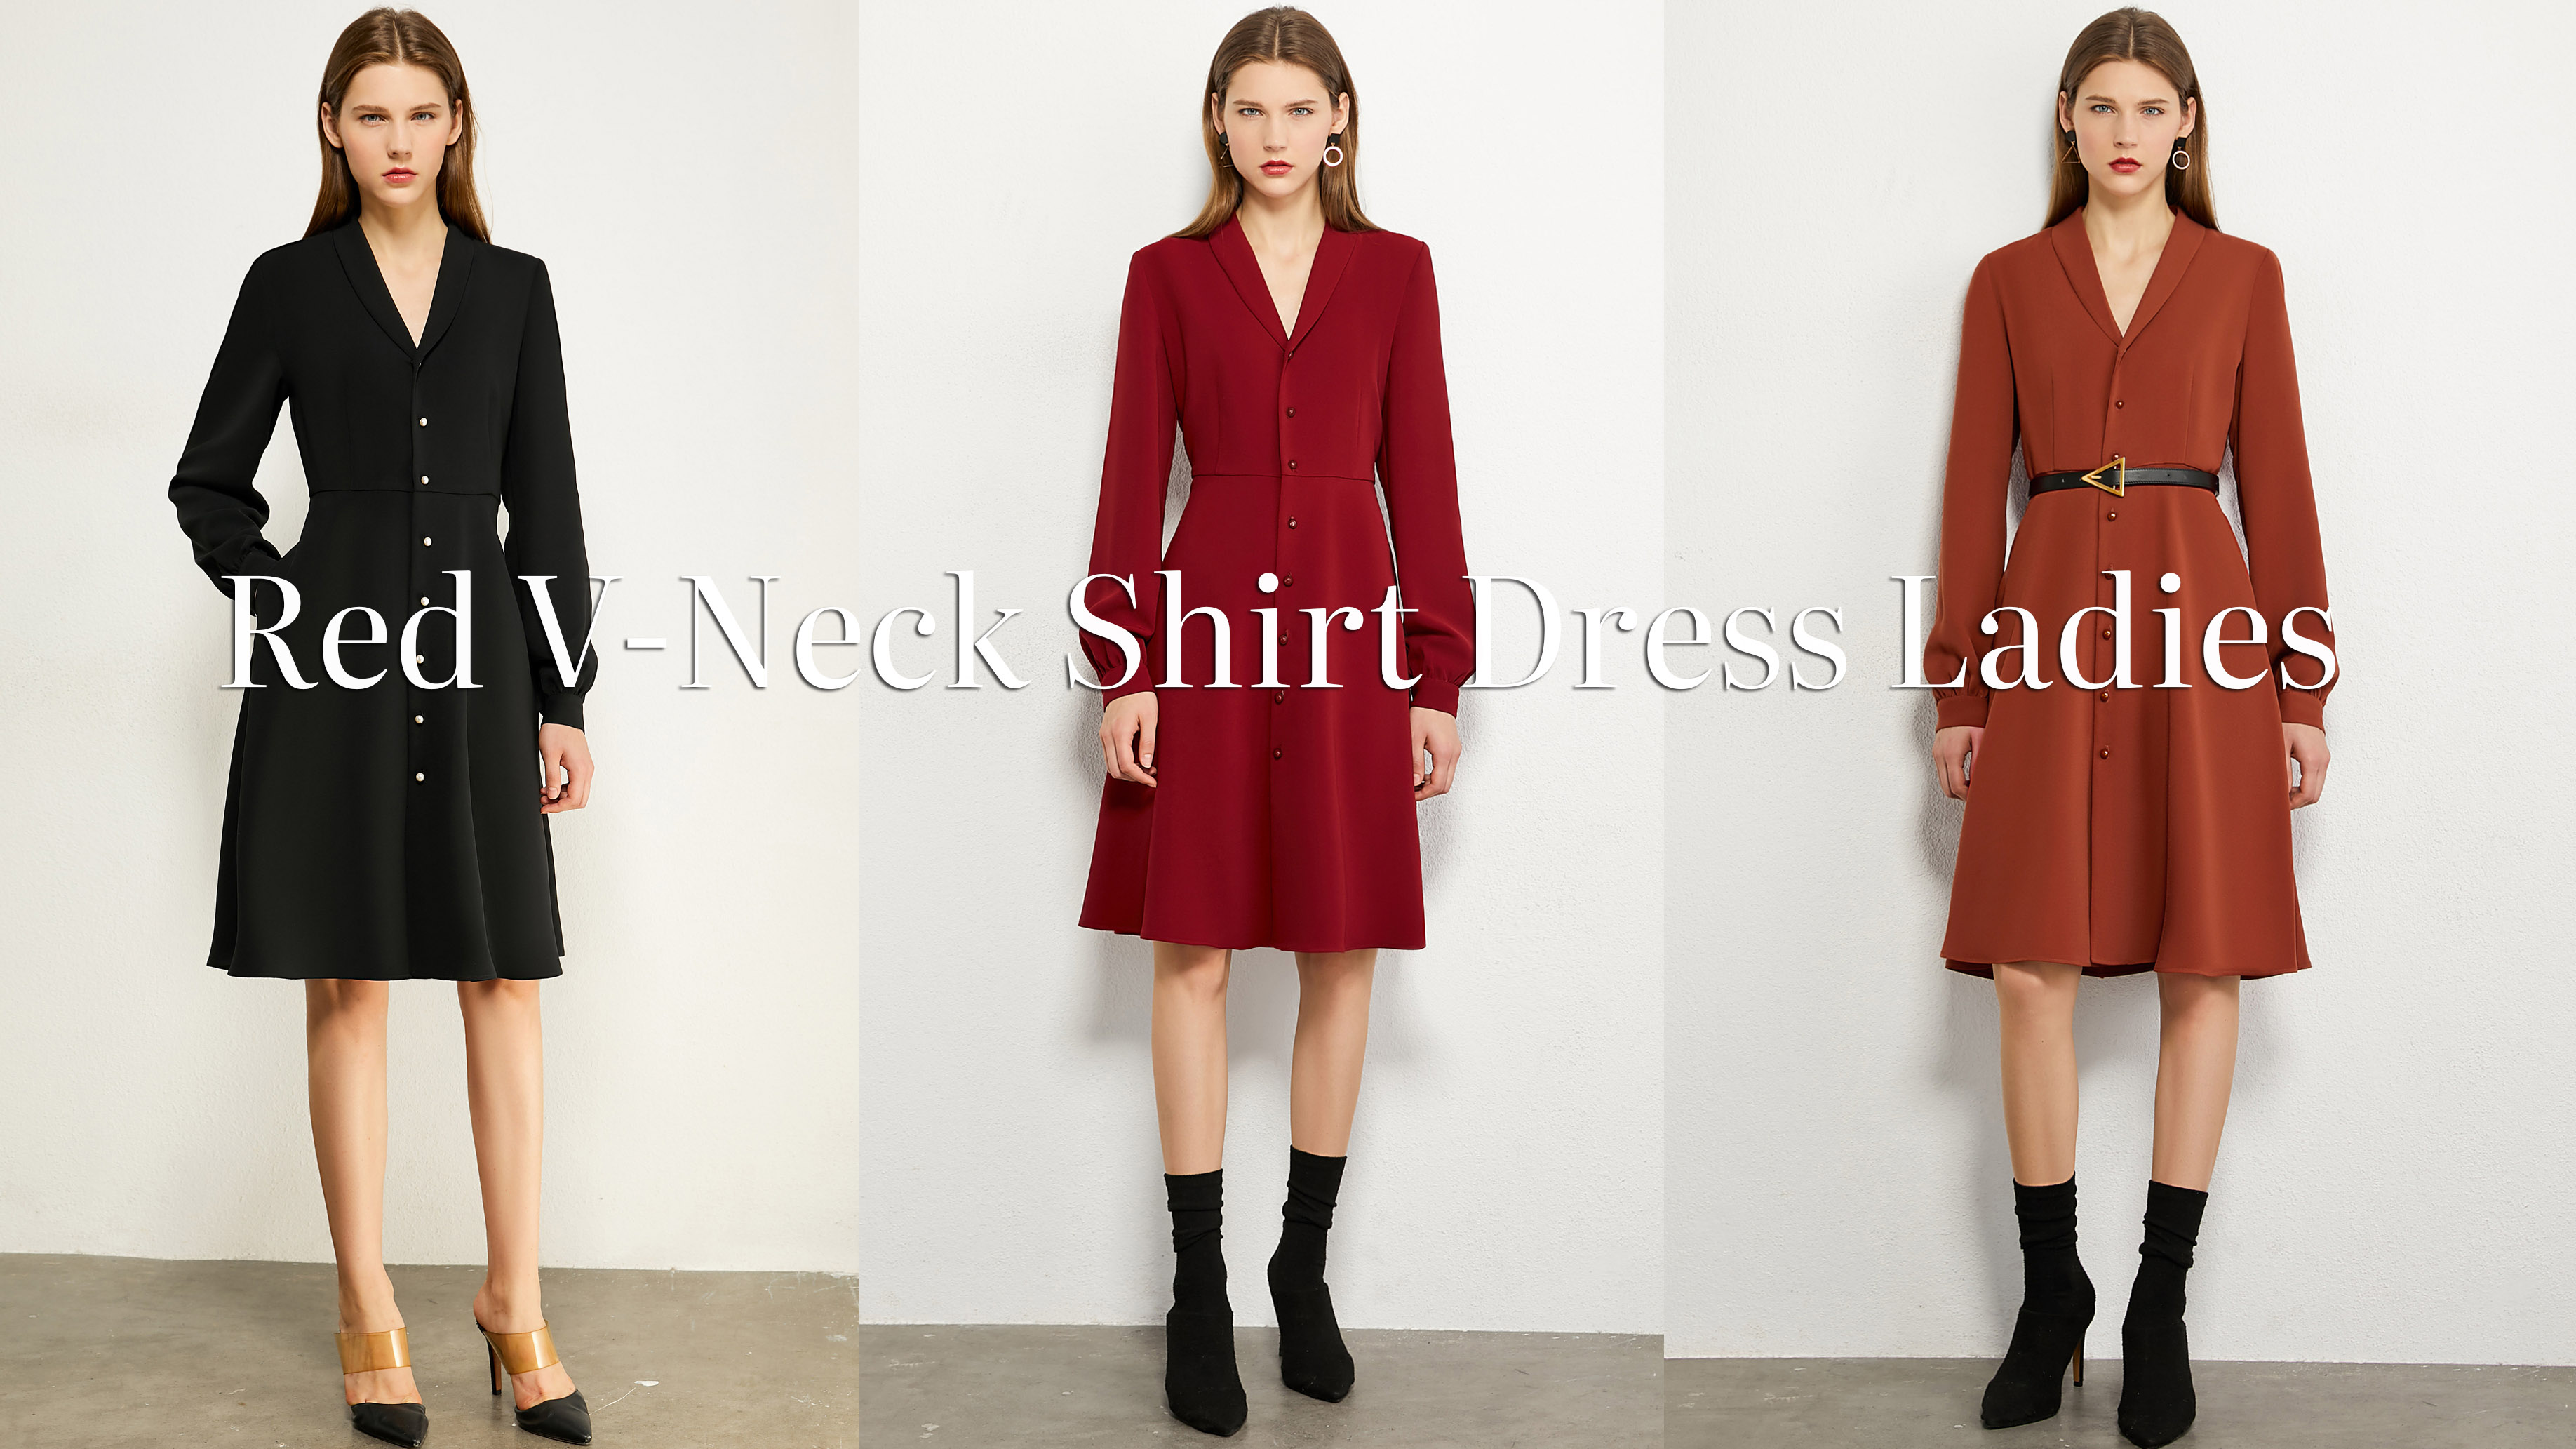 Quality Red V-Neck Shirt Dress Ladies Manufacturer |Auschalink